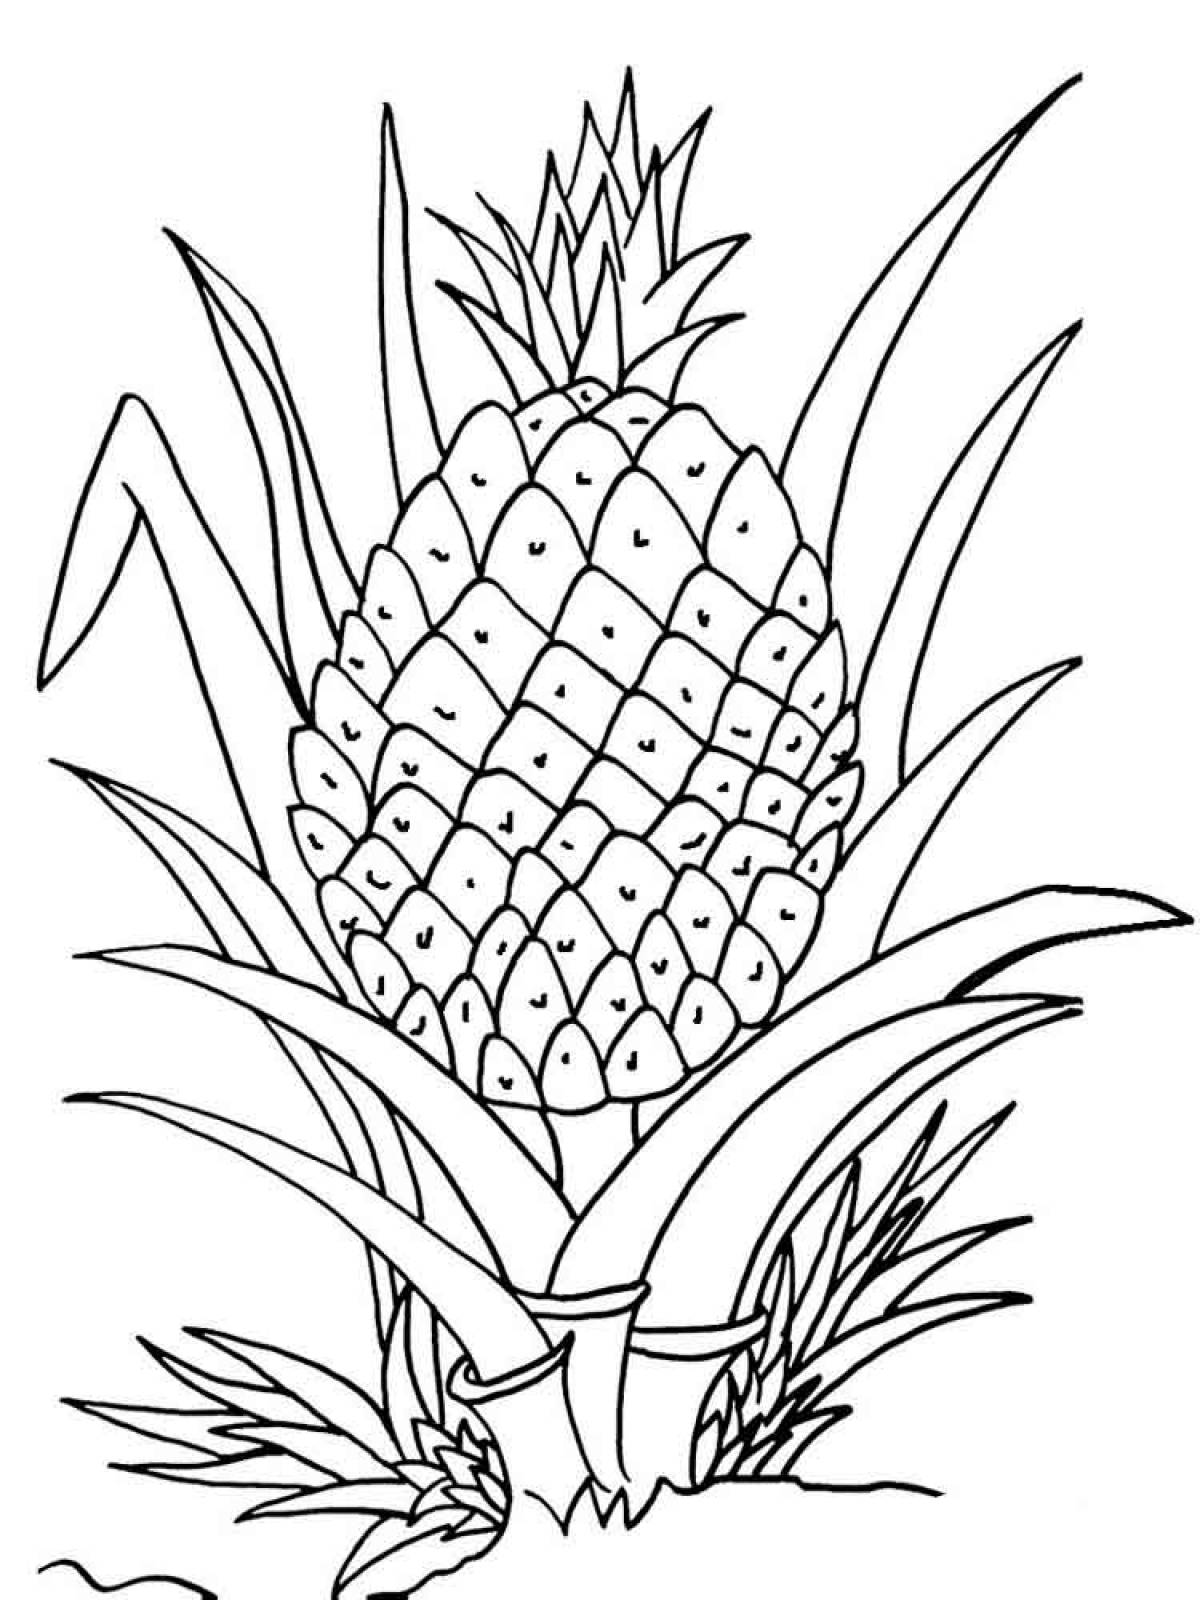 Drawing pineapple